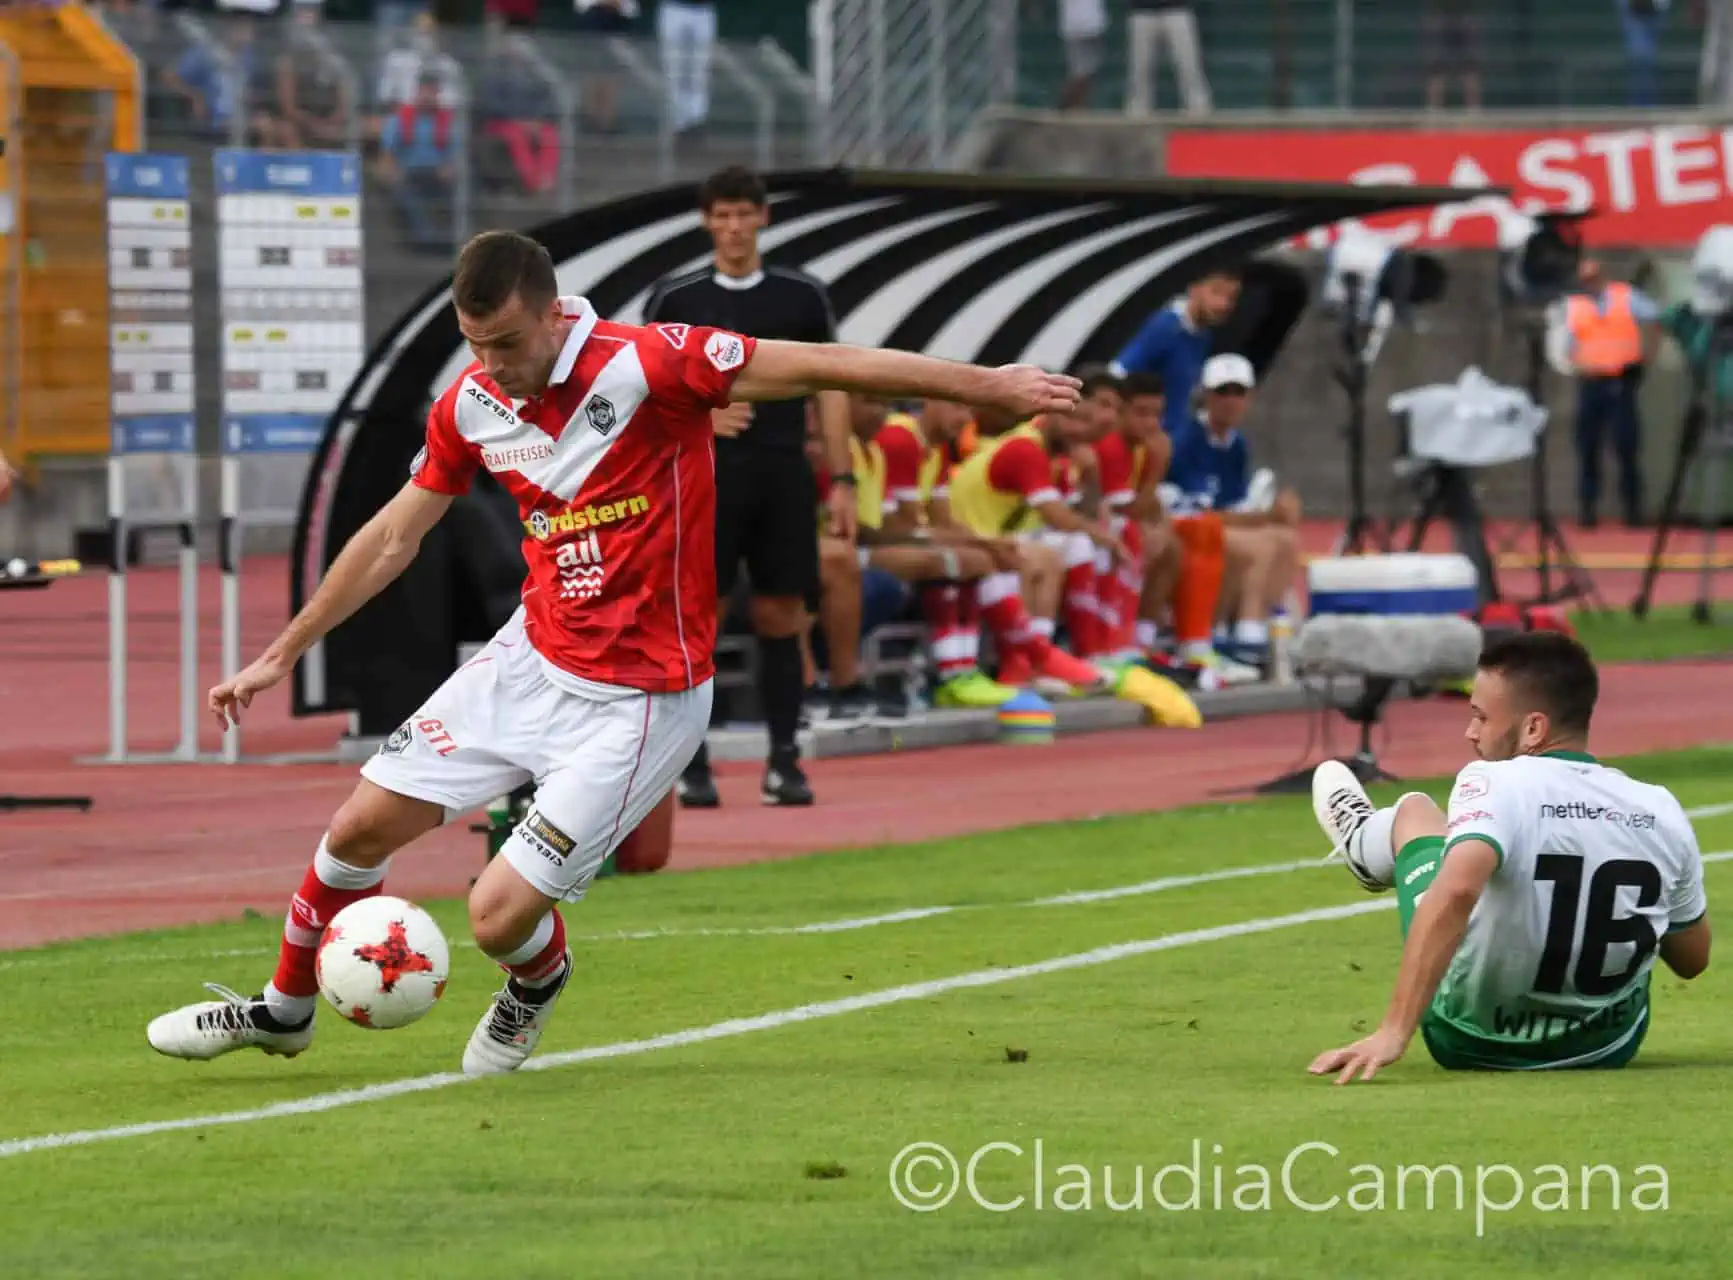 San Gallo-Lugano 3-0